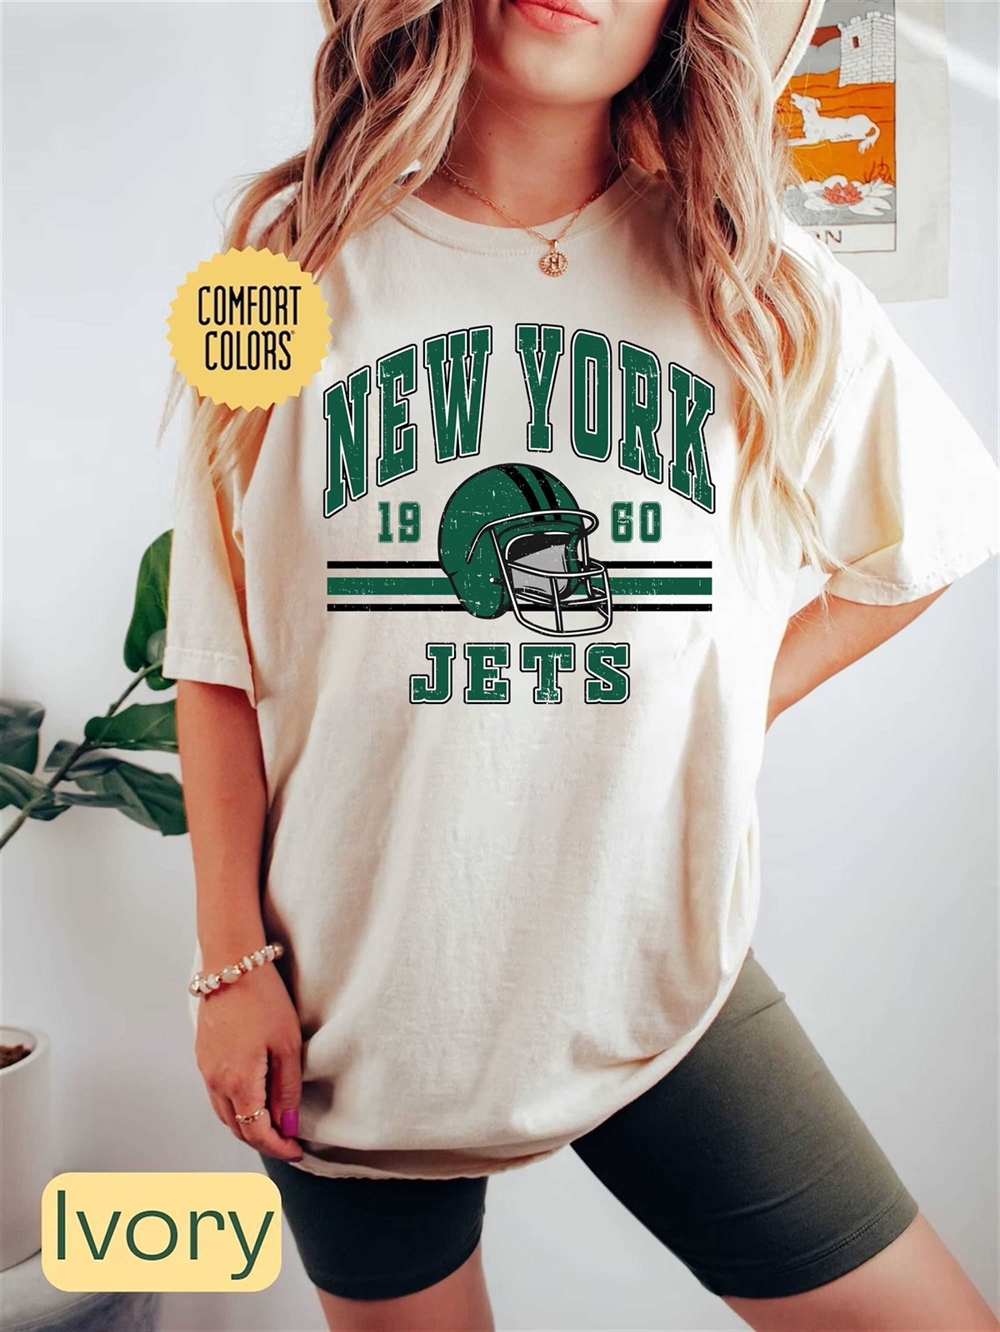 New York Football Comfort Colors Shirt Trendy Vintage Retro 80s Style Jets Football Tshirt